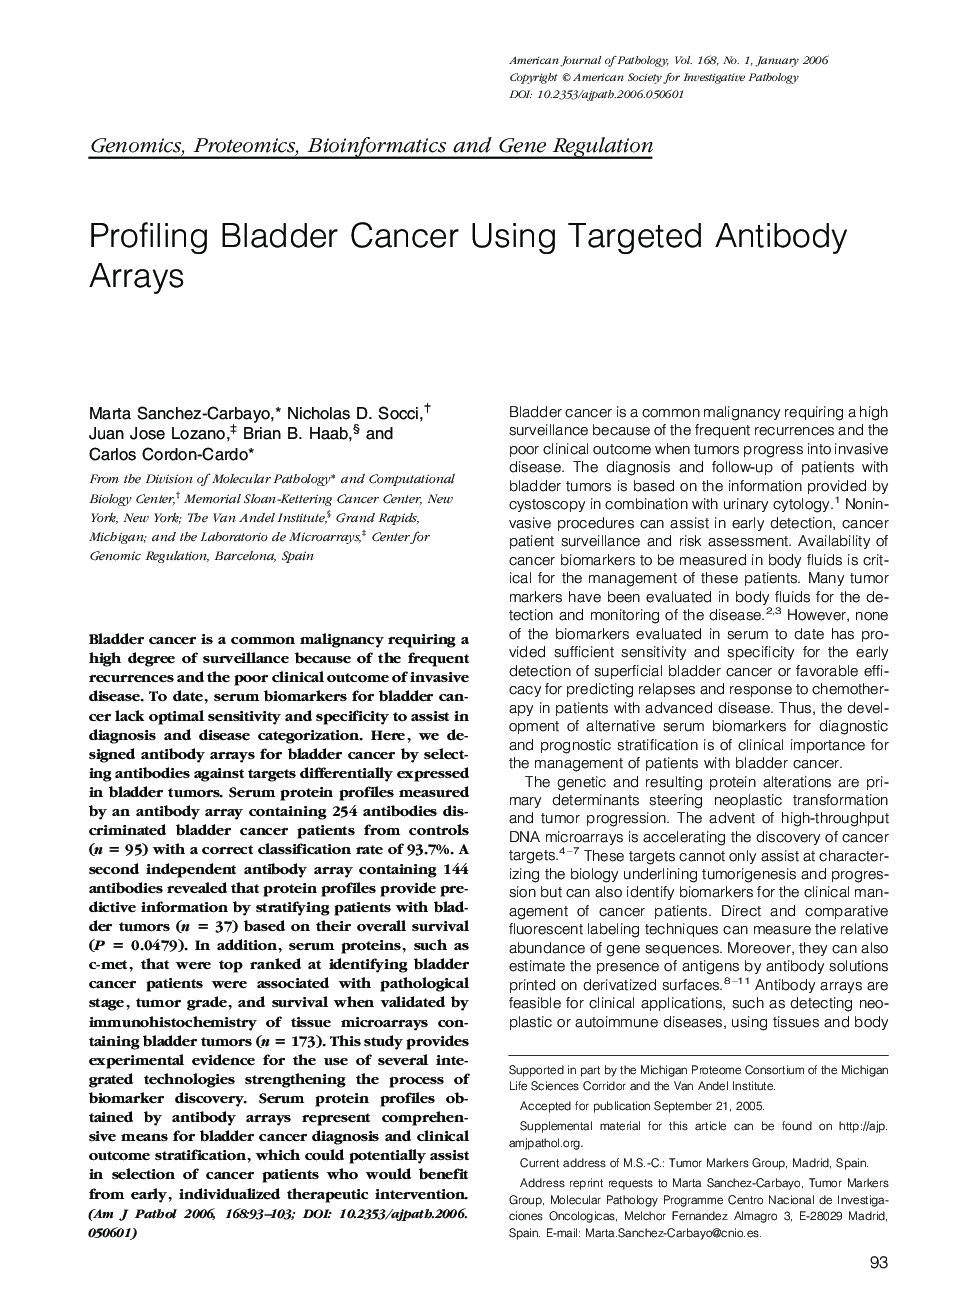 Regular ArticlesProfiling Bladder Cancer Using Targeted Antibody Arrays